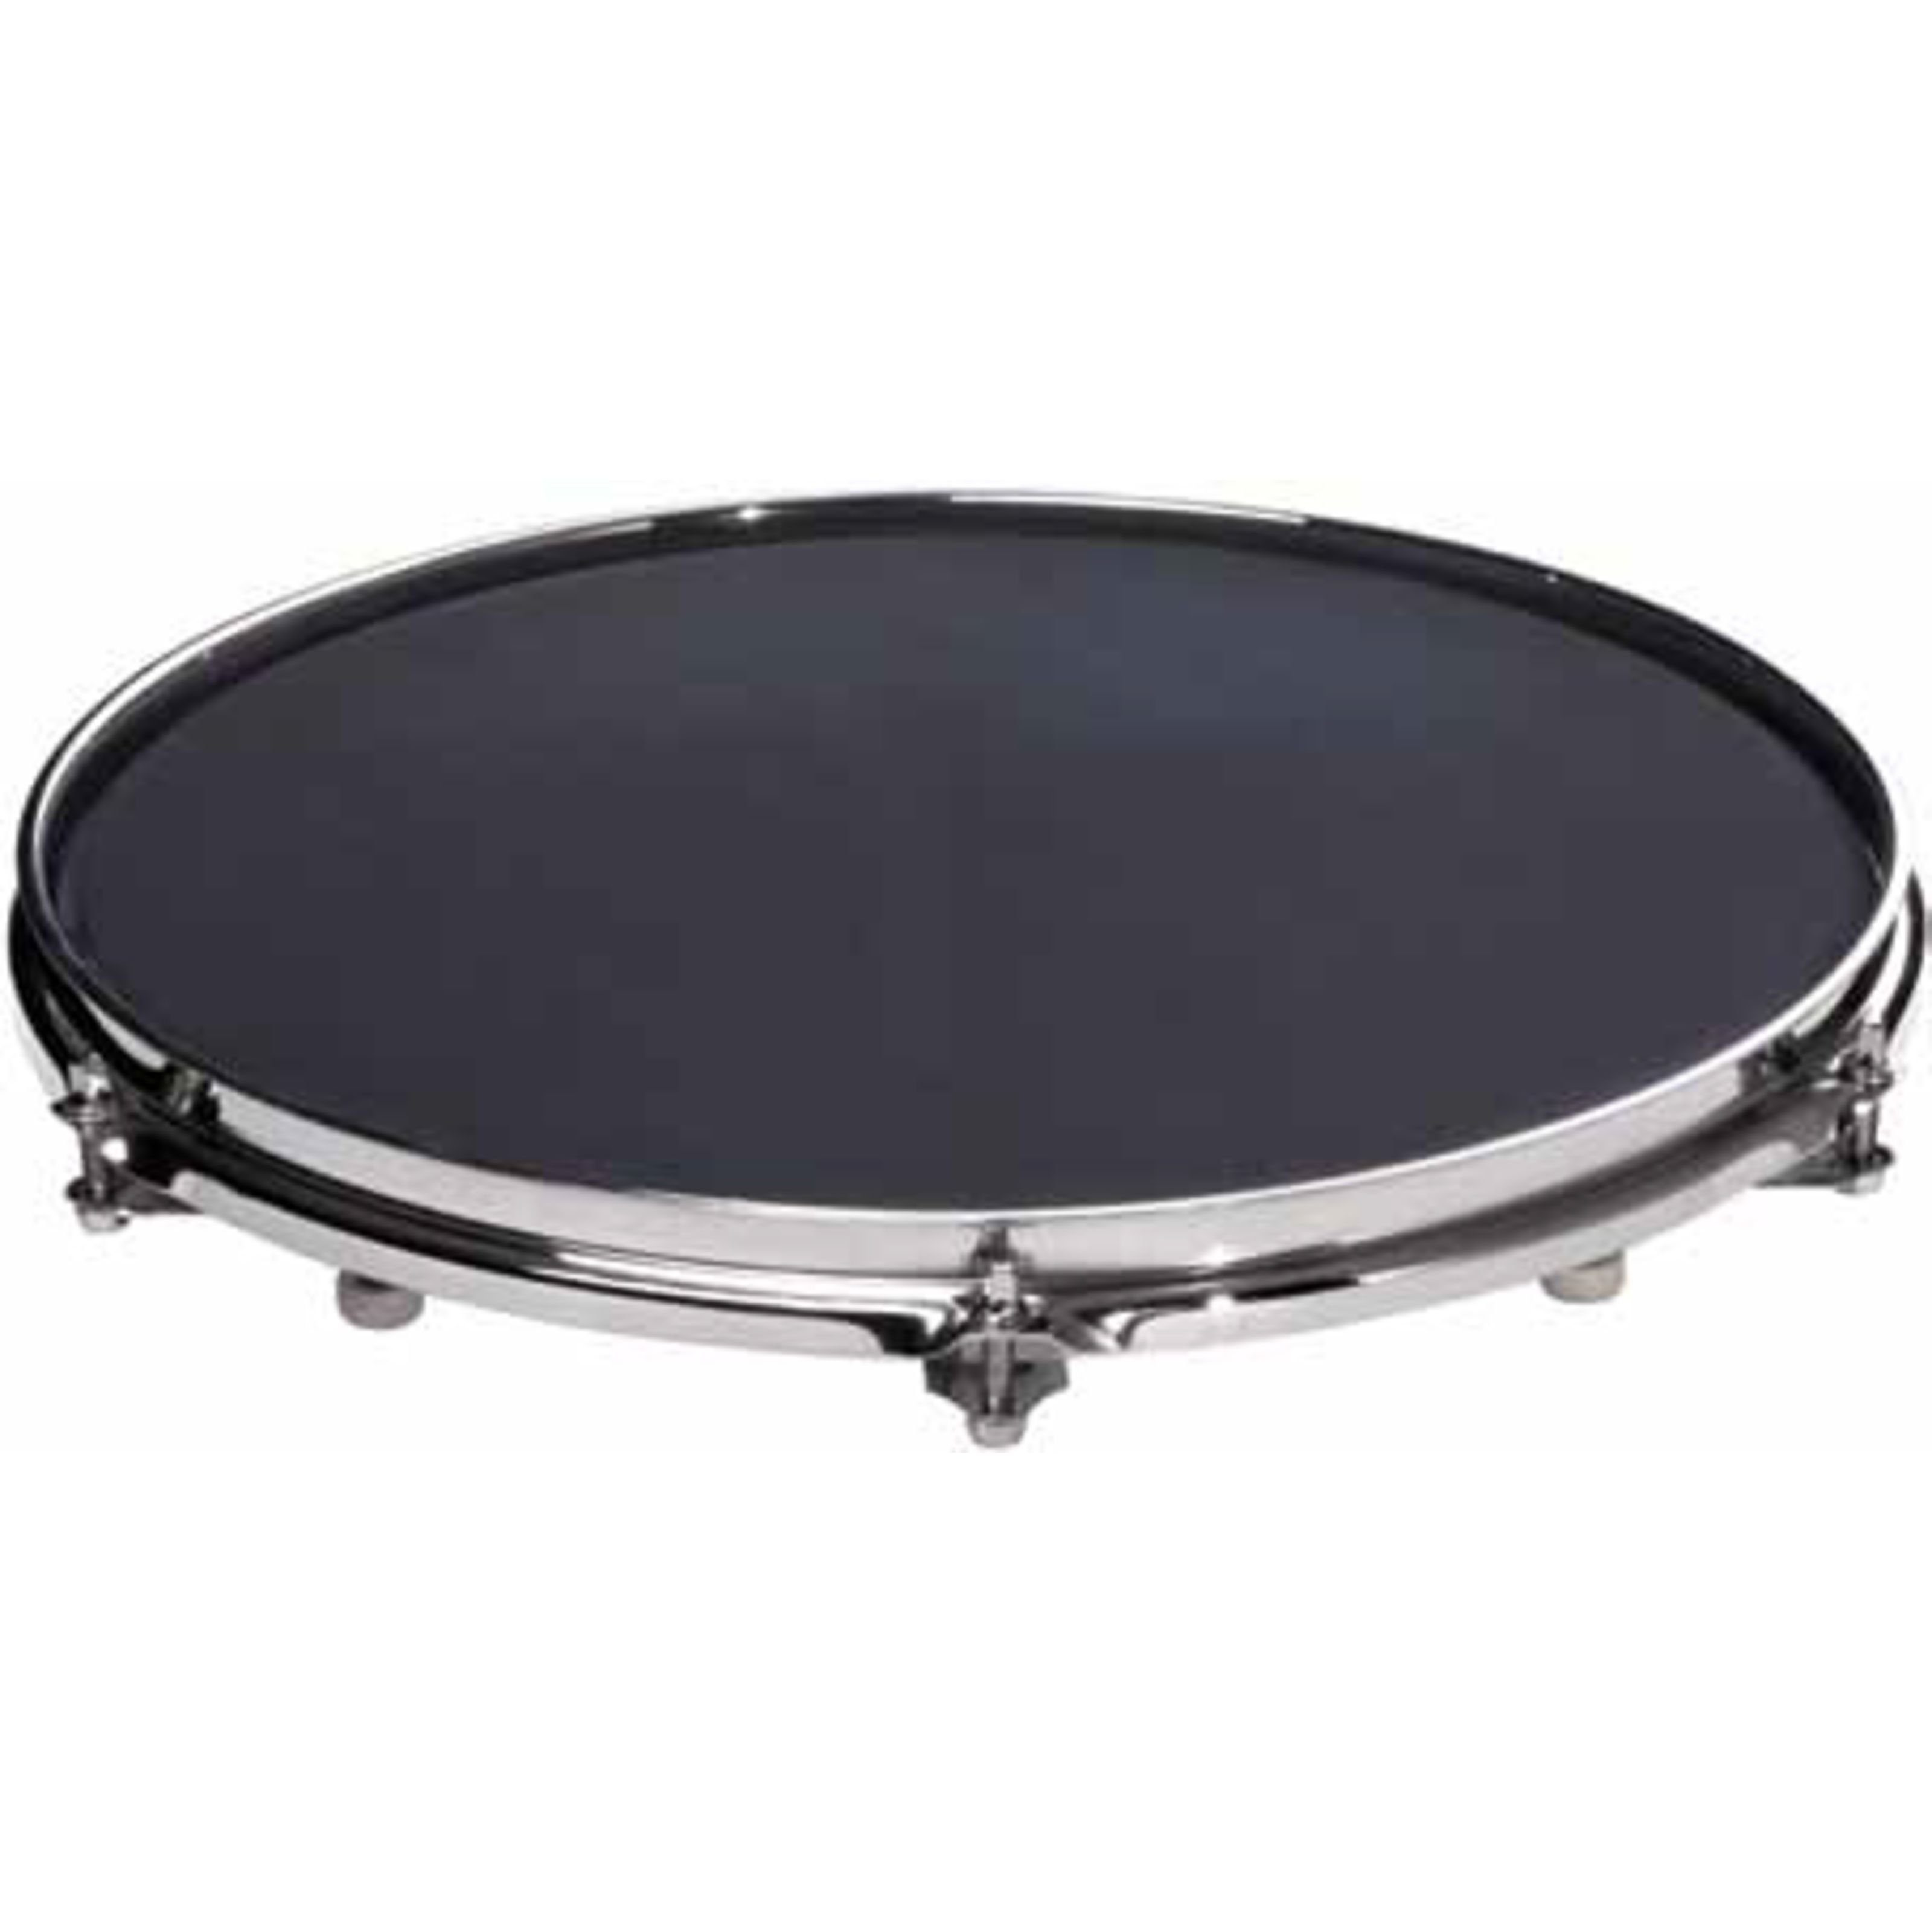 Snare Practice Drum, Quiet Sabian Tone, Spielzeug-Musikinstrument, Pad Mesh 14"